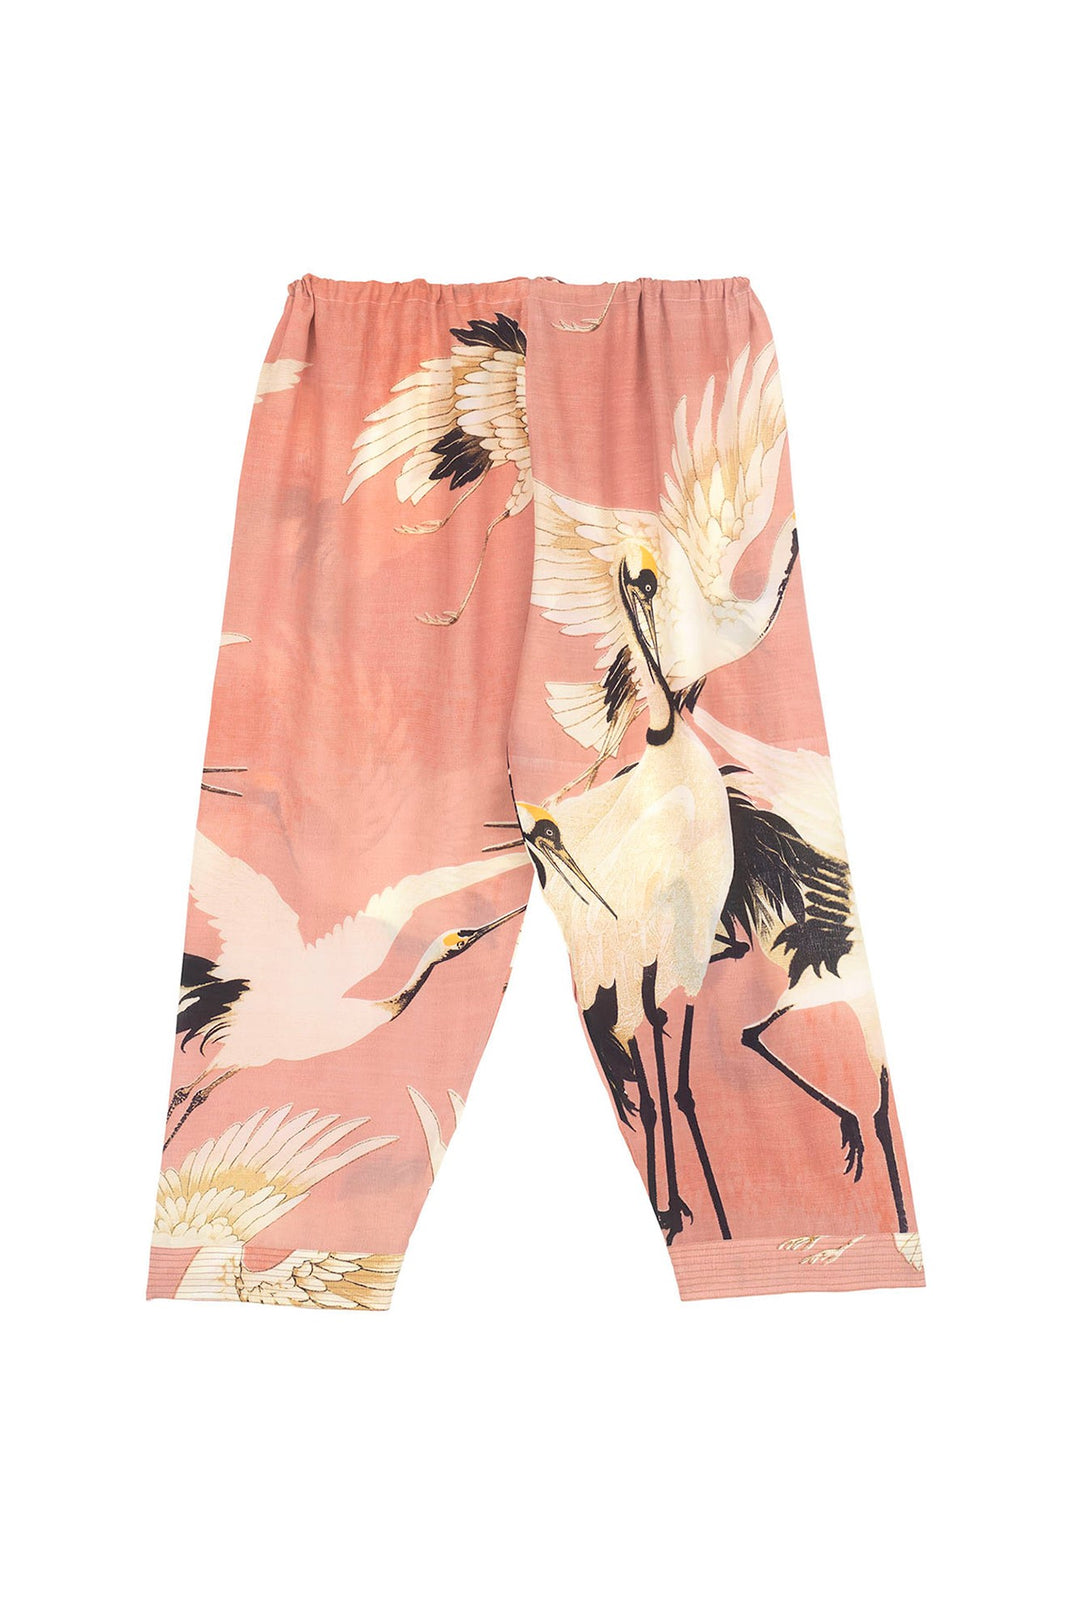 Stork Plaster Pink Lounge Pants - One Hundred Stars